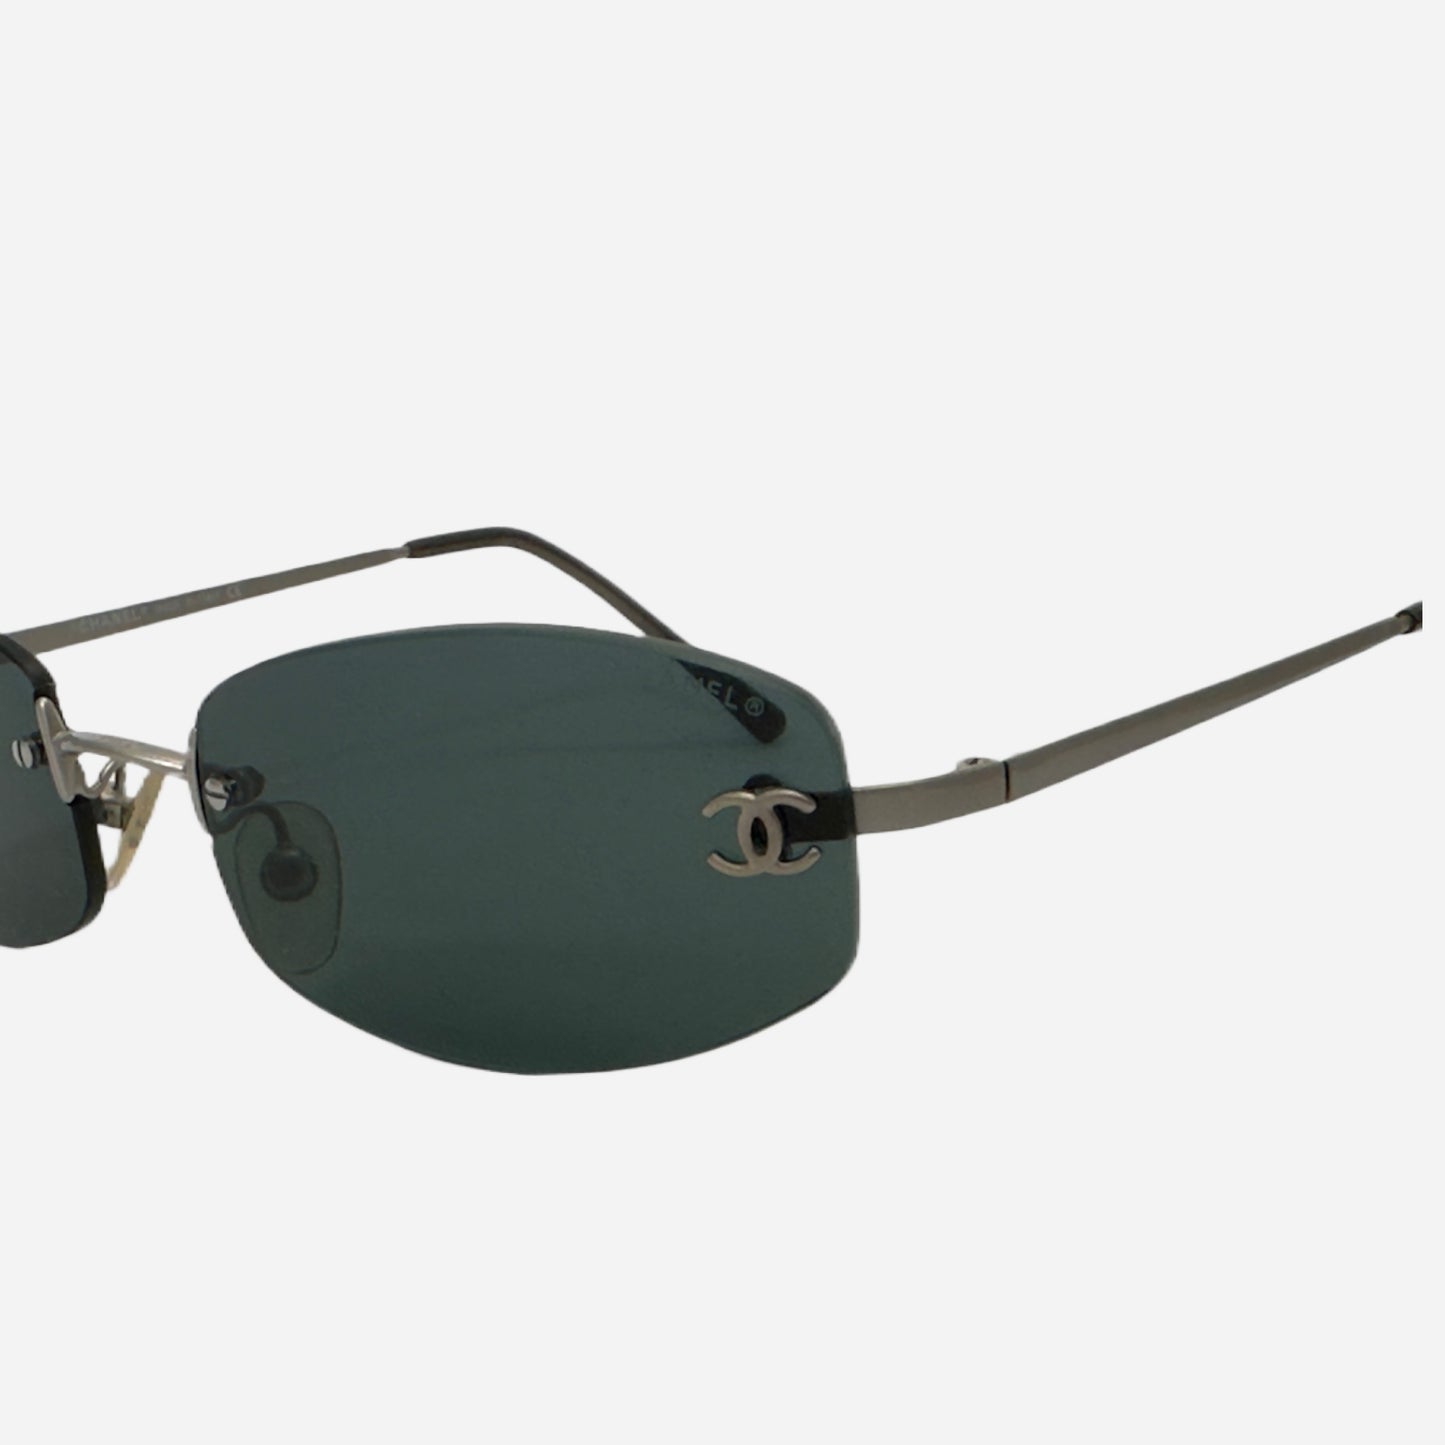 The-Seekers-Vintage-Coco-Chanel-Sunglasses-Sonnenbrille-Rahmenlos-4002-side-detail